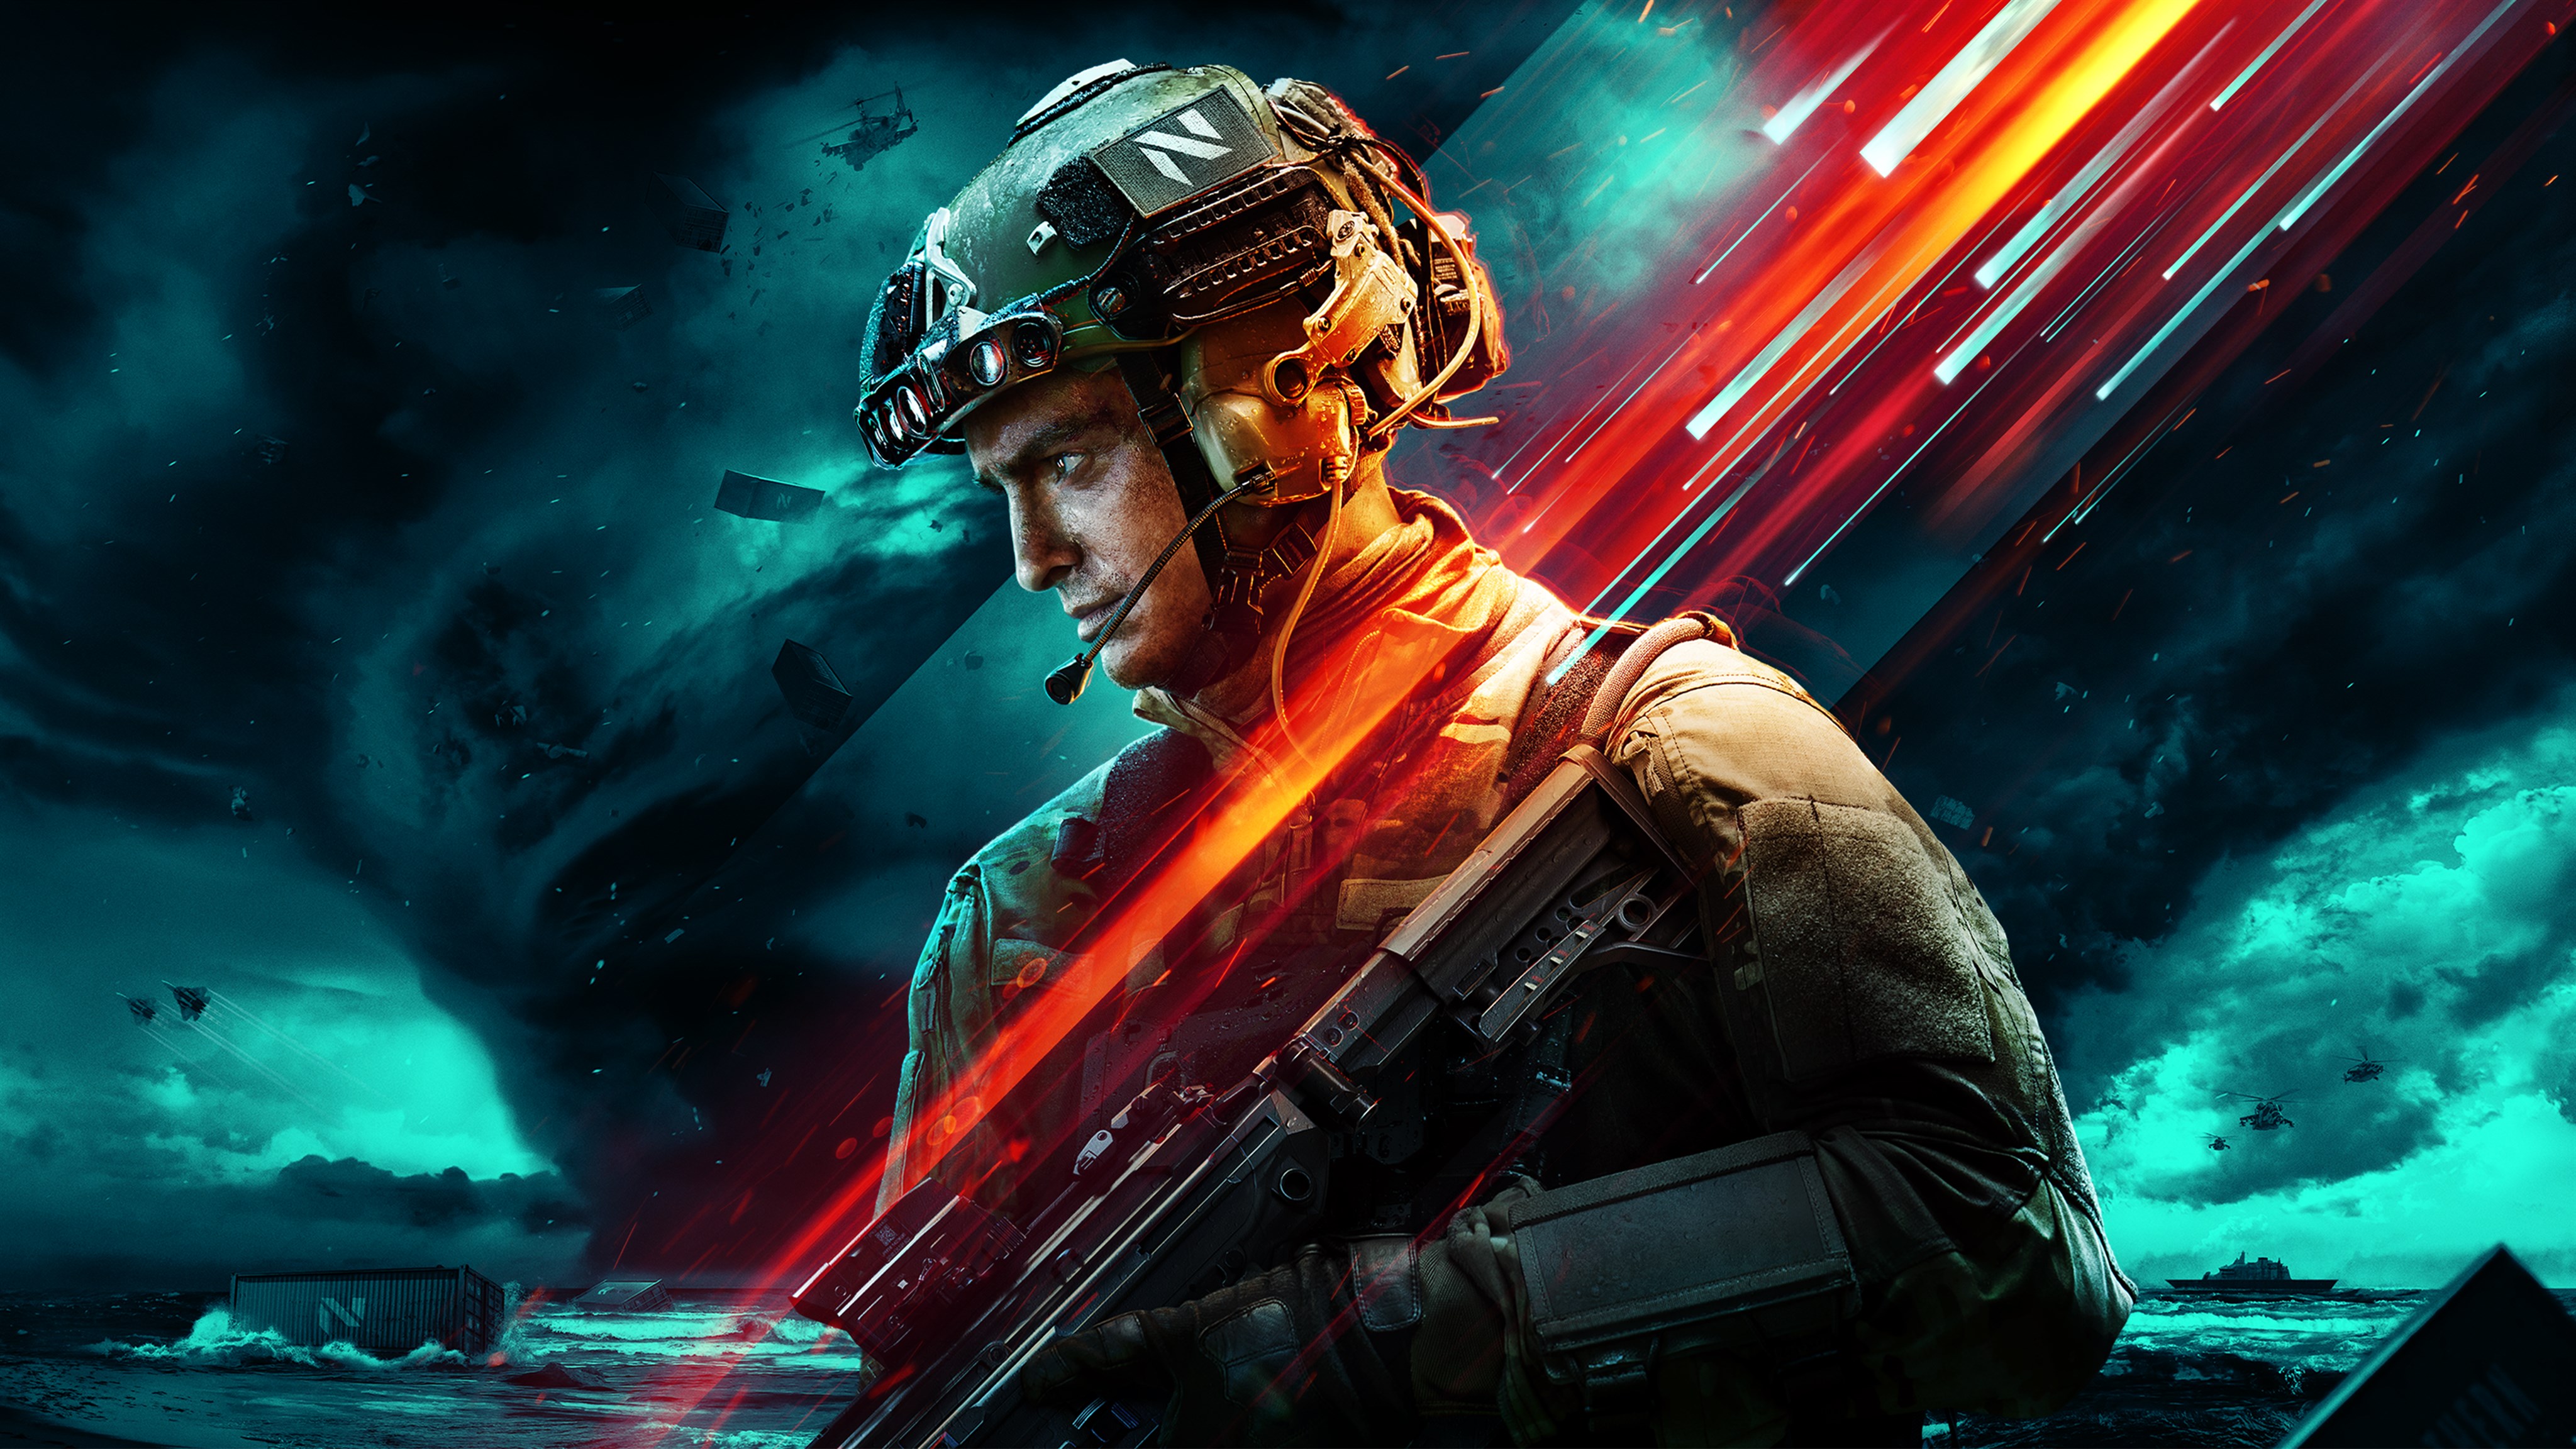 Battlefield 2042 4k Ultra HD Wallpaper Background Image 4096x2304 3840x2160